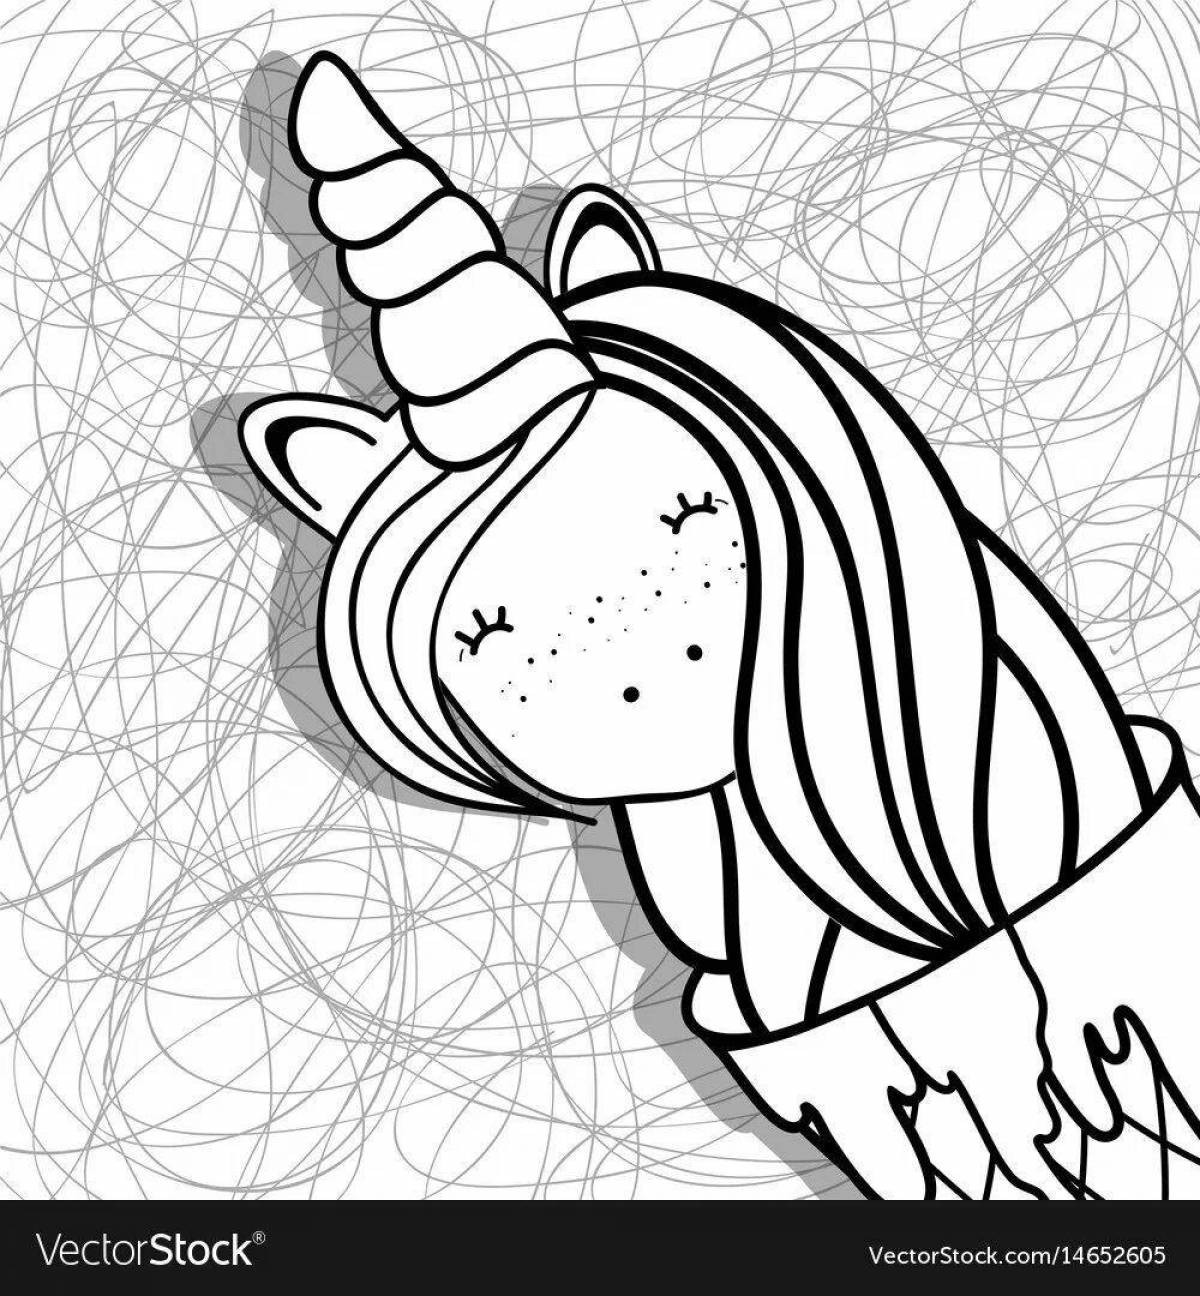 Humorous unicorn ice cream coloring book